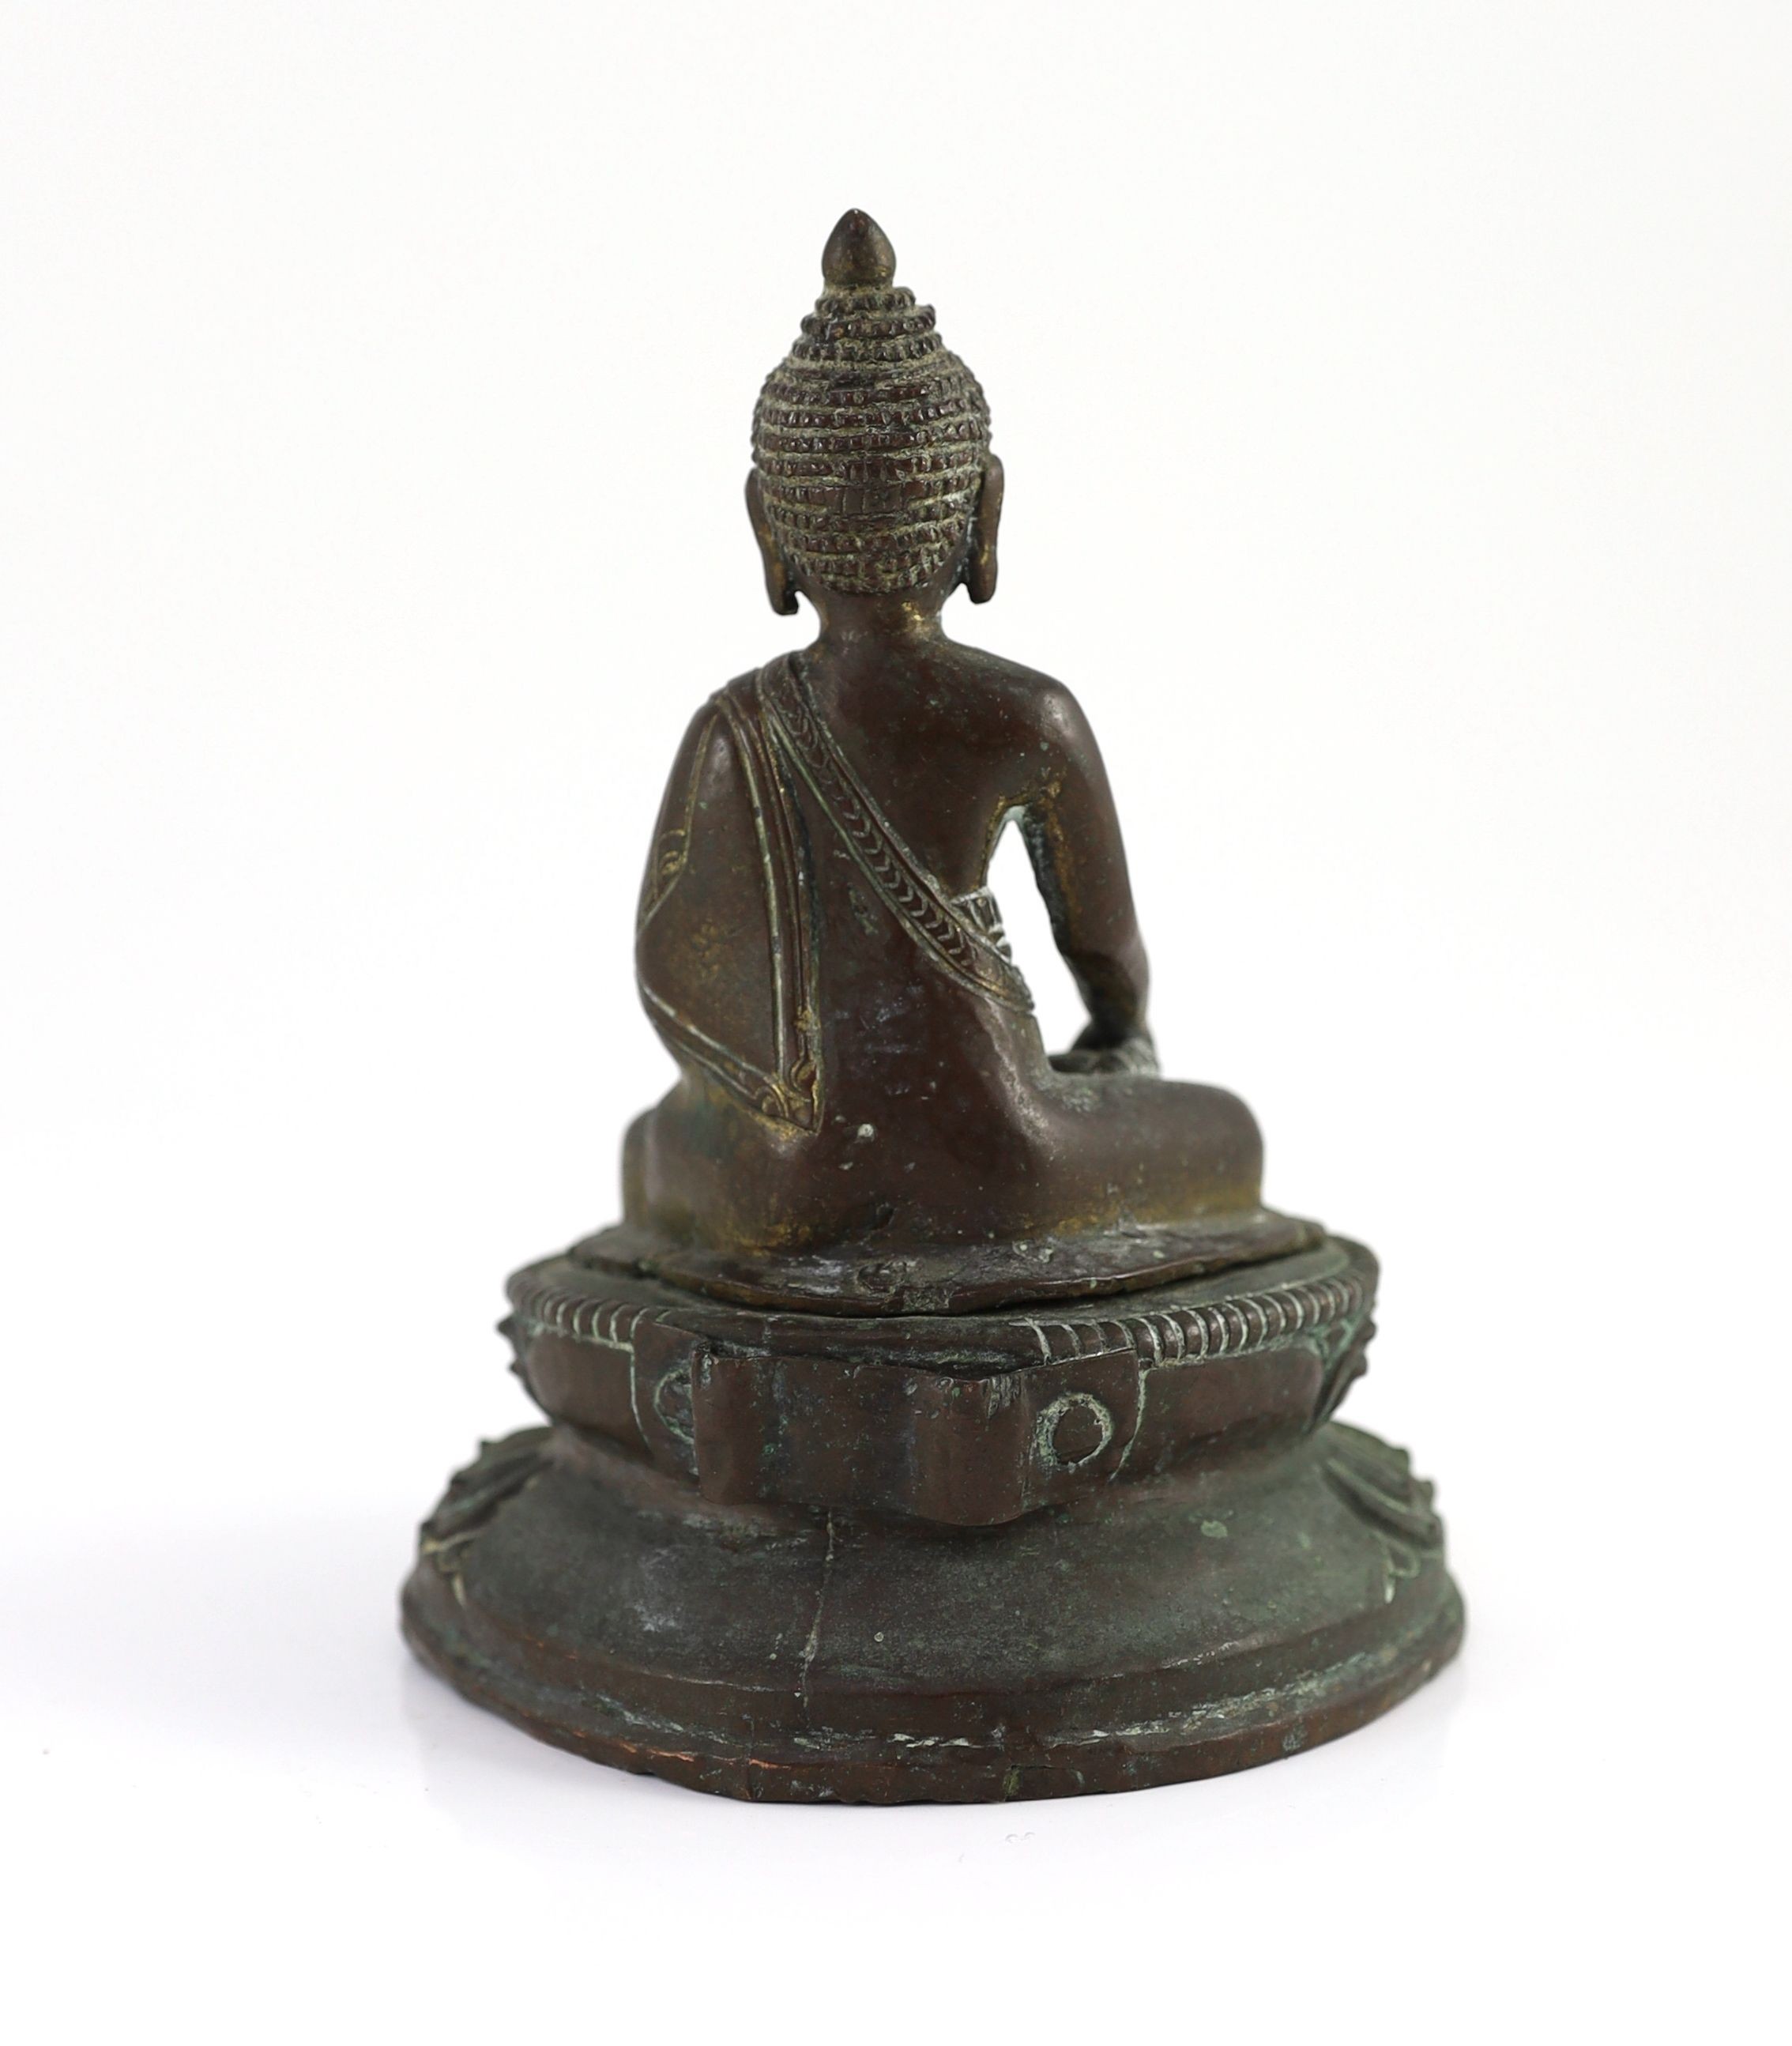 A Nepalese or Tibetan gilt copper alloy figure of Buddha Shakyamuni, 18th/19th century, 15cm high